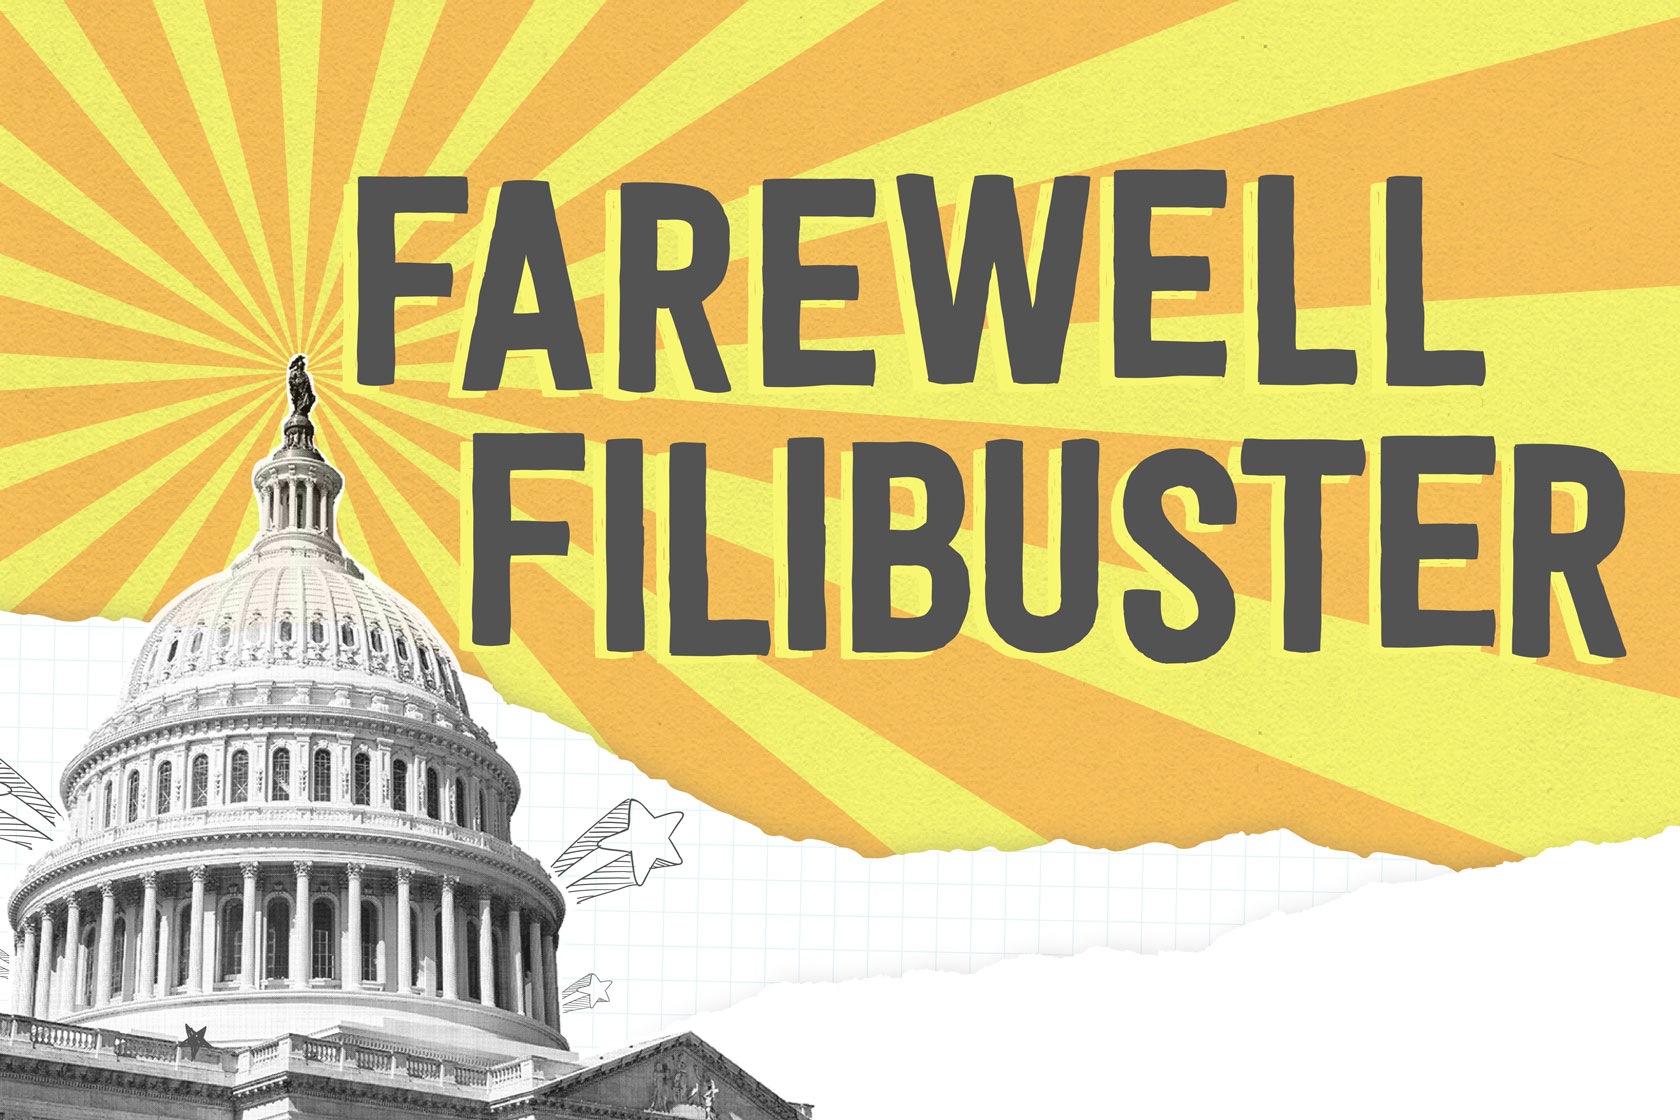 Farewell Filibuster